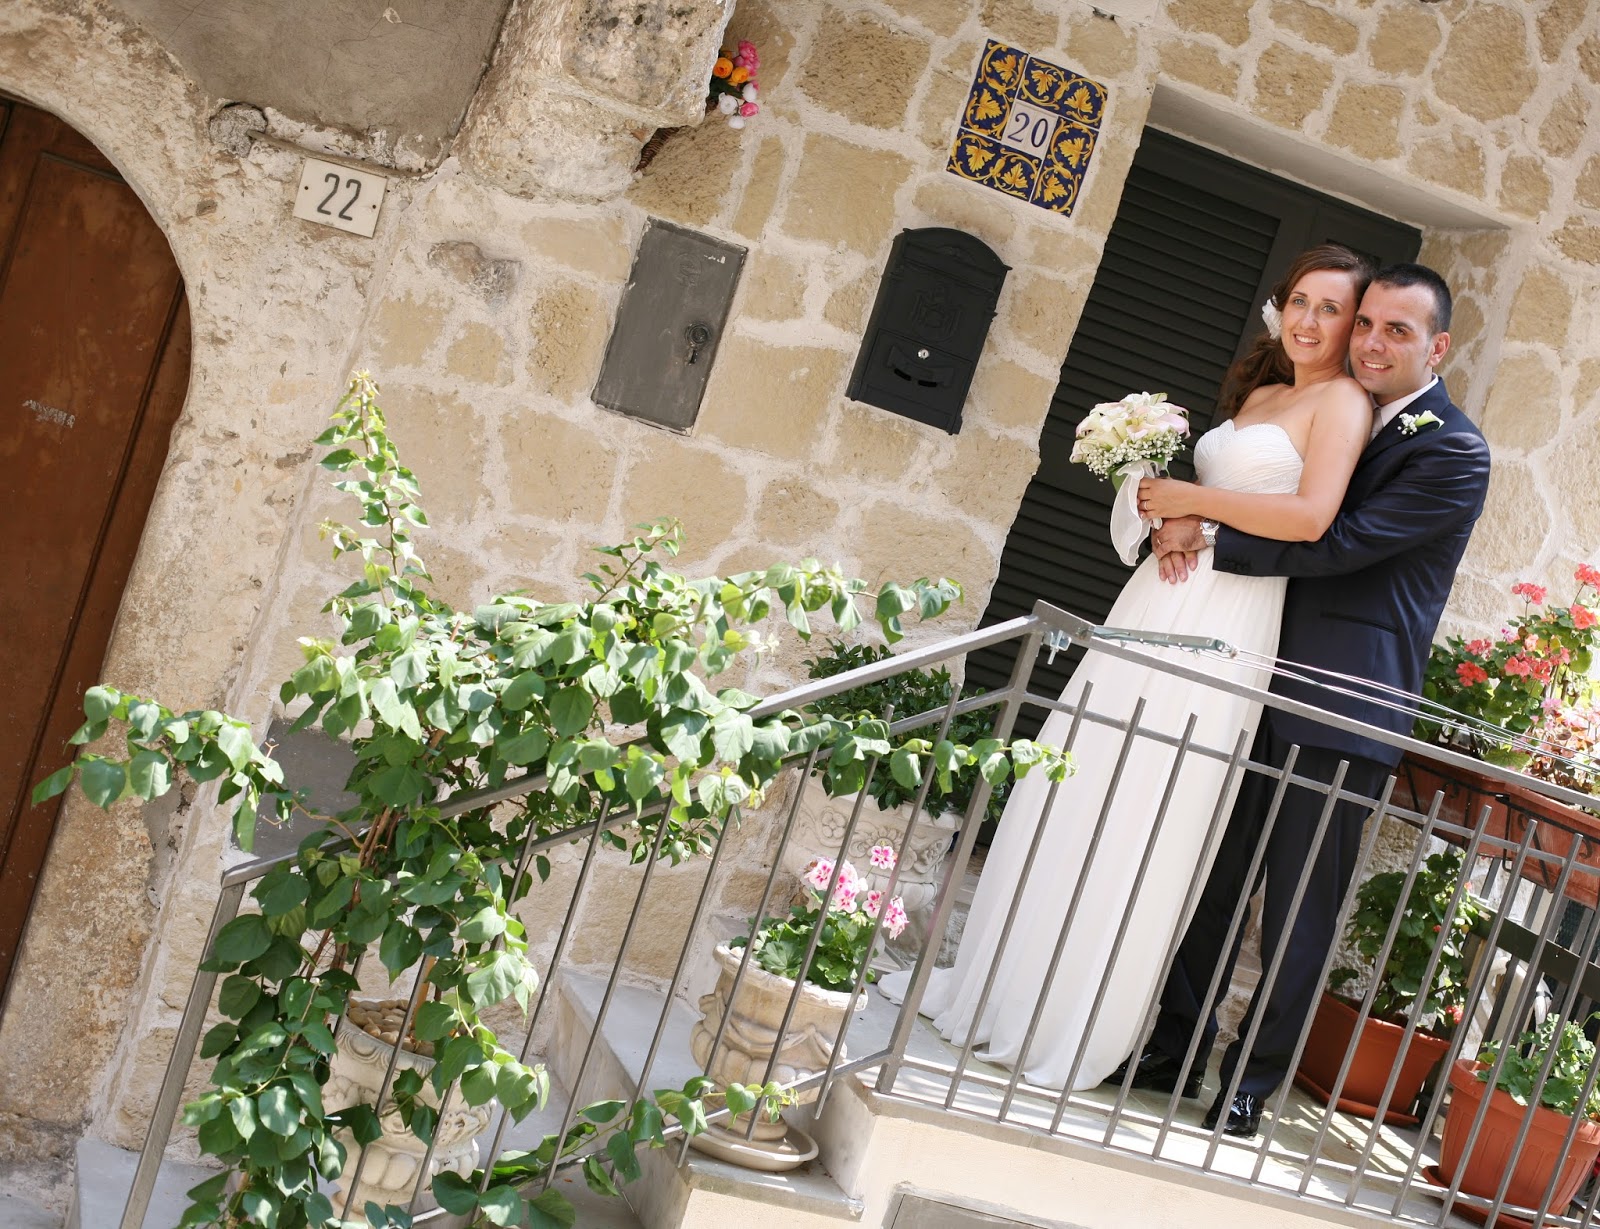 http://www.ilblogdisposamioggi.com/2015/03/matrimonio-stile-grecia.html